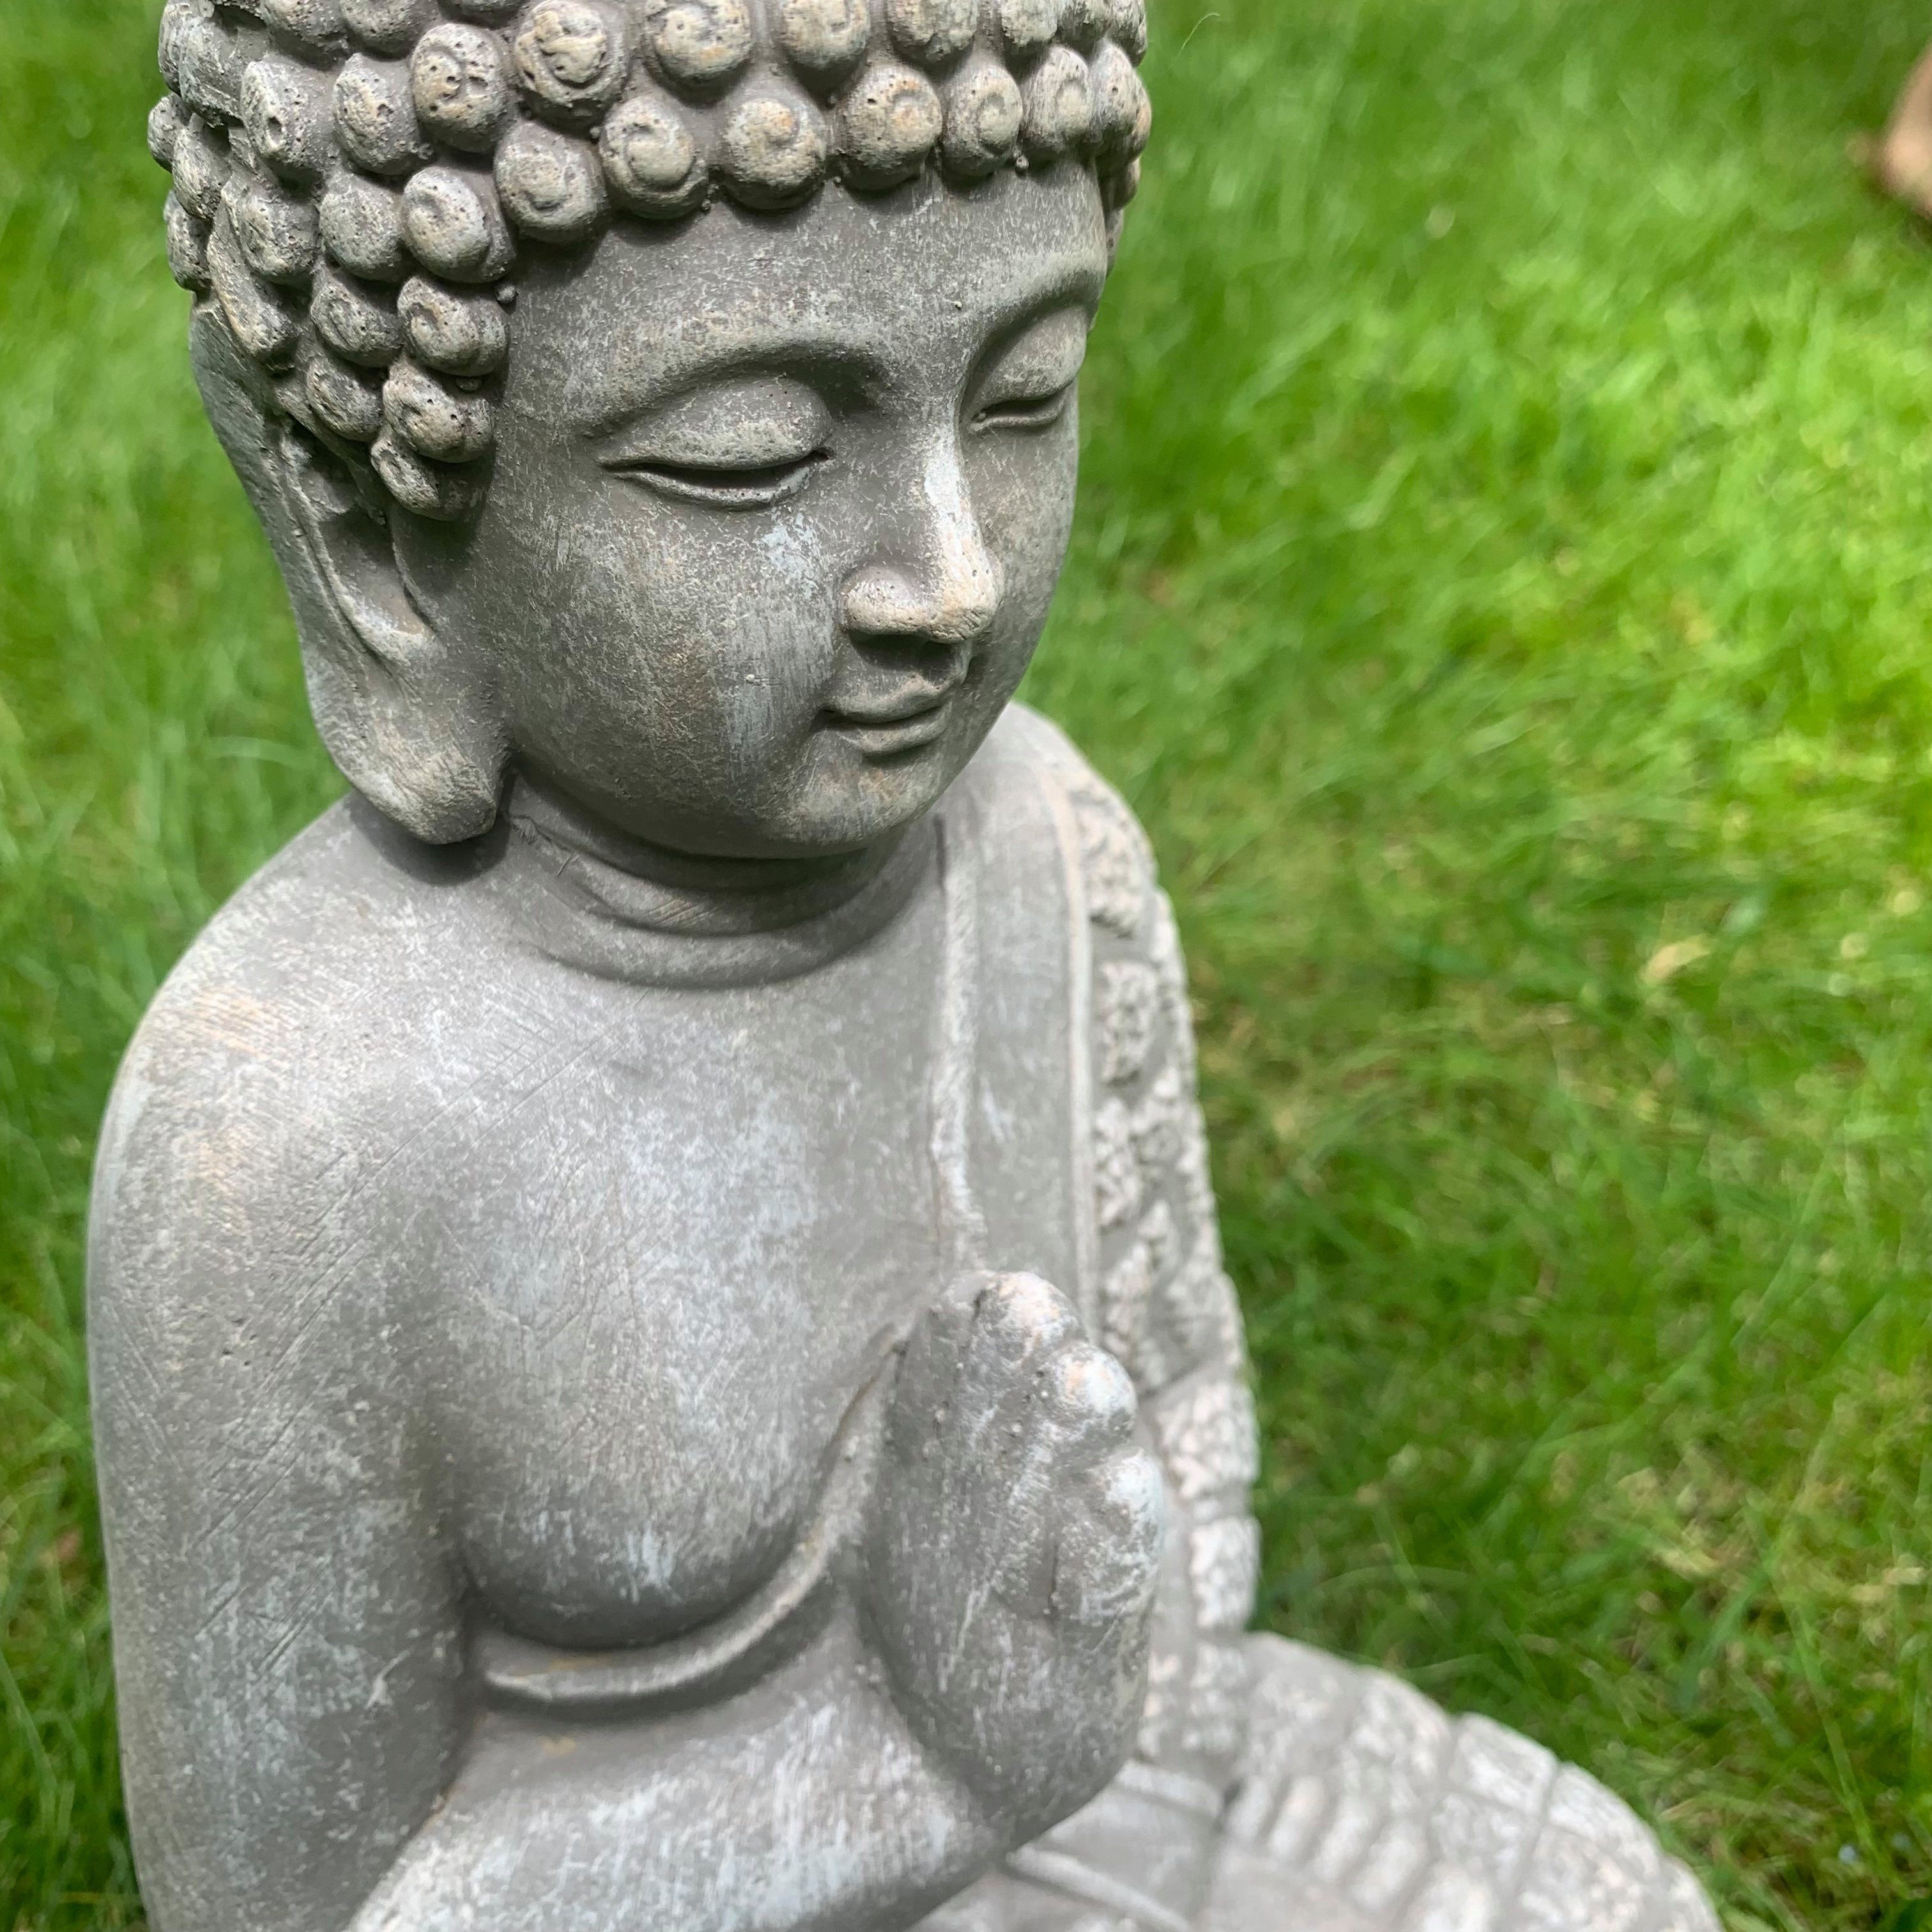 Deko (1, Feng Wall 33cm Gartendeko Kunststein Art Buddha große Beton Gartenfigur), K&L Buddhafigur Statue Wellness Steinfigur Shui